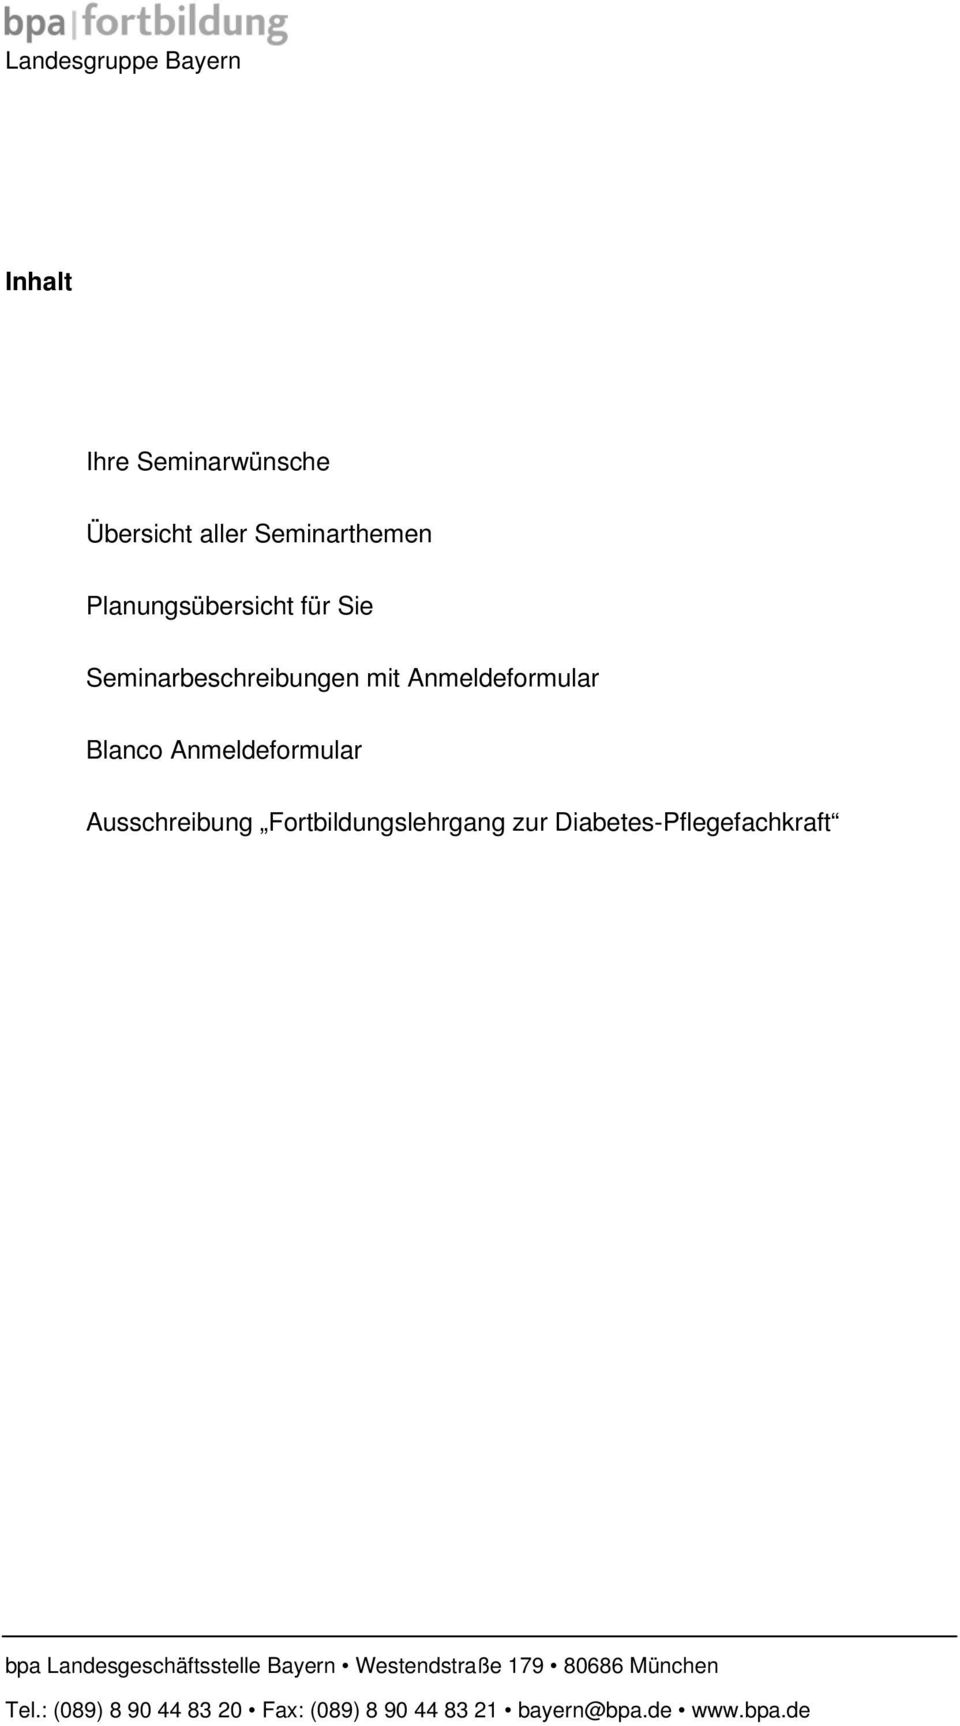 Fortbildungslehrgang zur Diabetes-Pflegefachkraft bpa Landesgeschäftsstelle Bayern